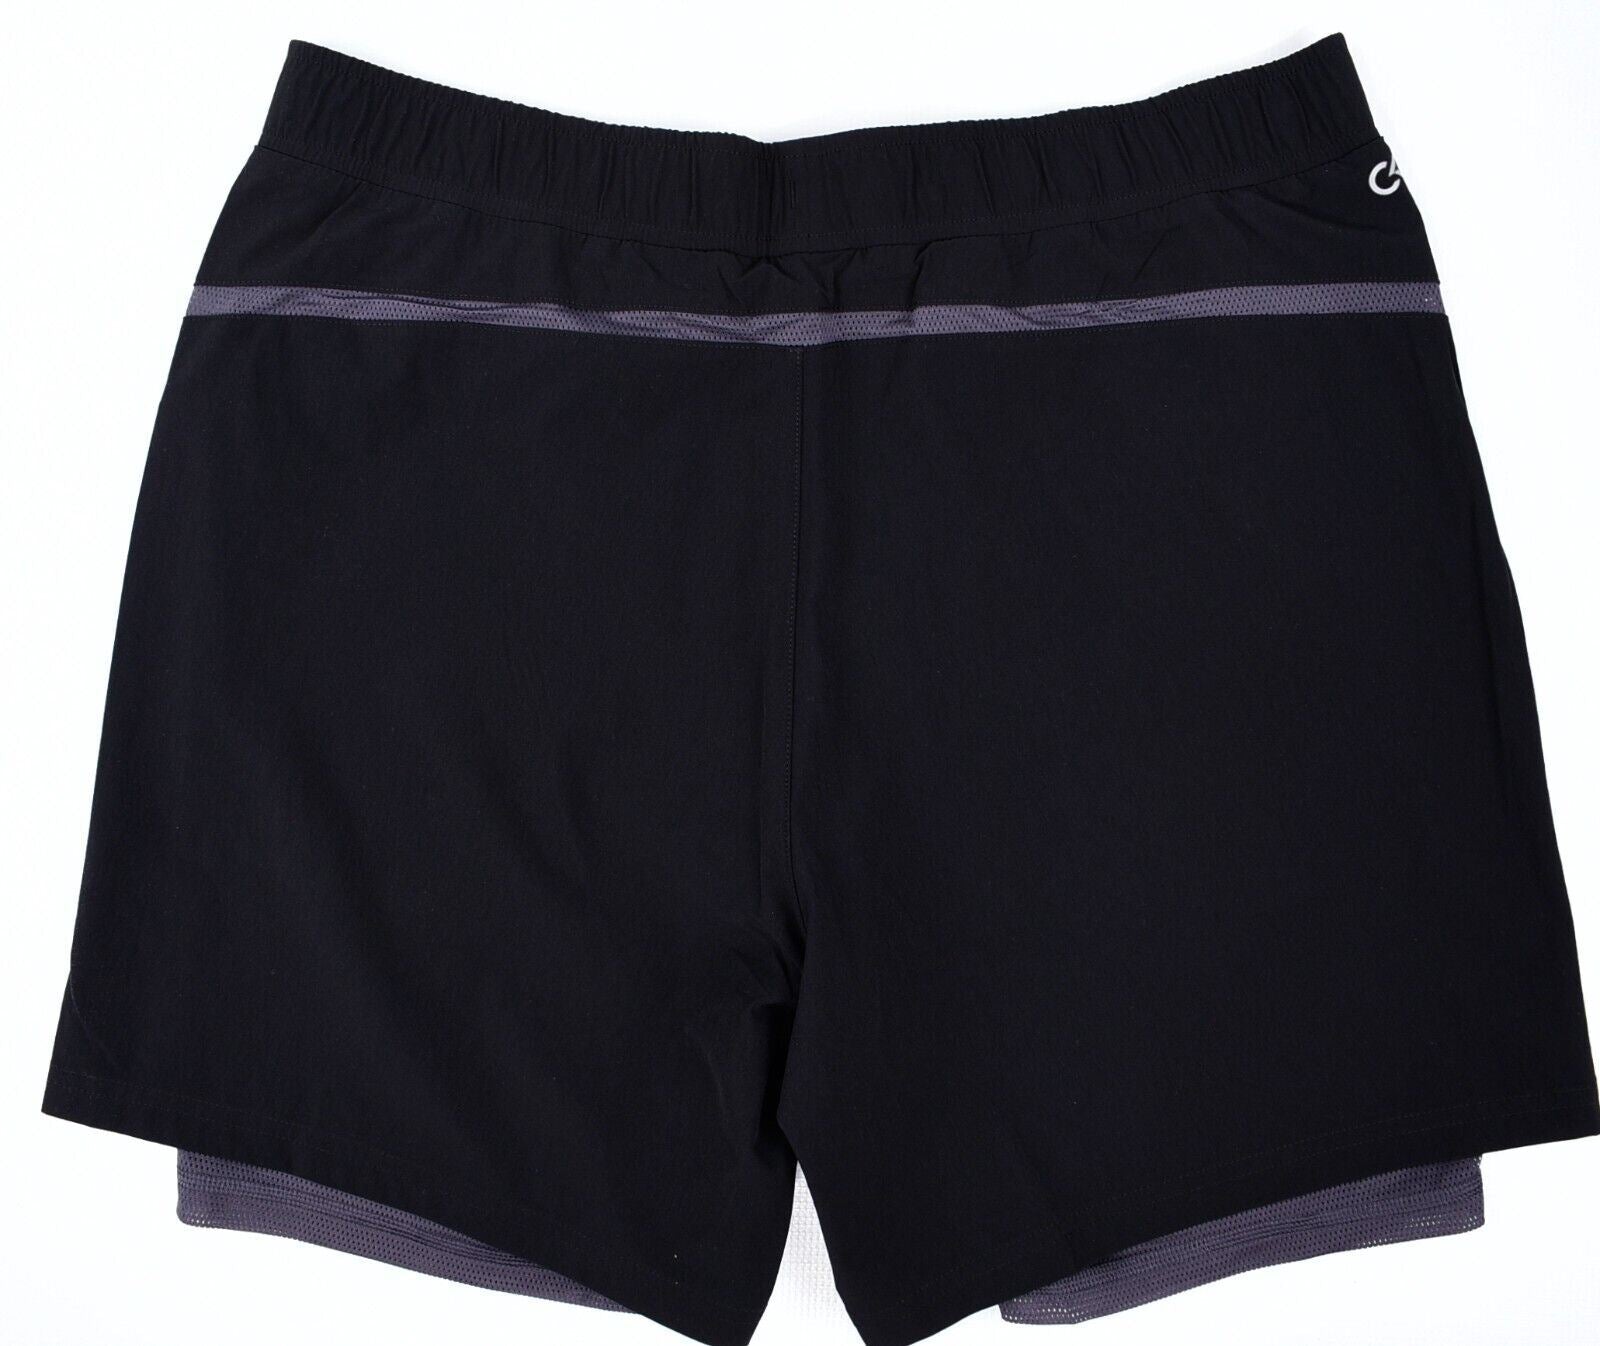 CALVIN KLEIN Performance: Men's 2-in 1 Workout Shorts, Black/Grey, size L